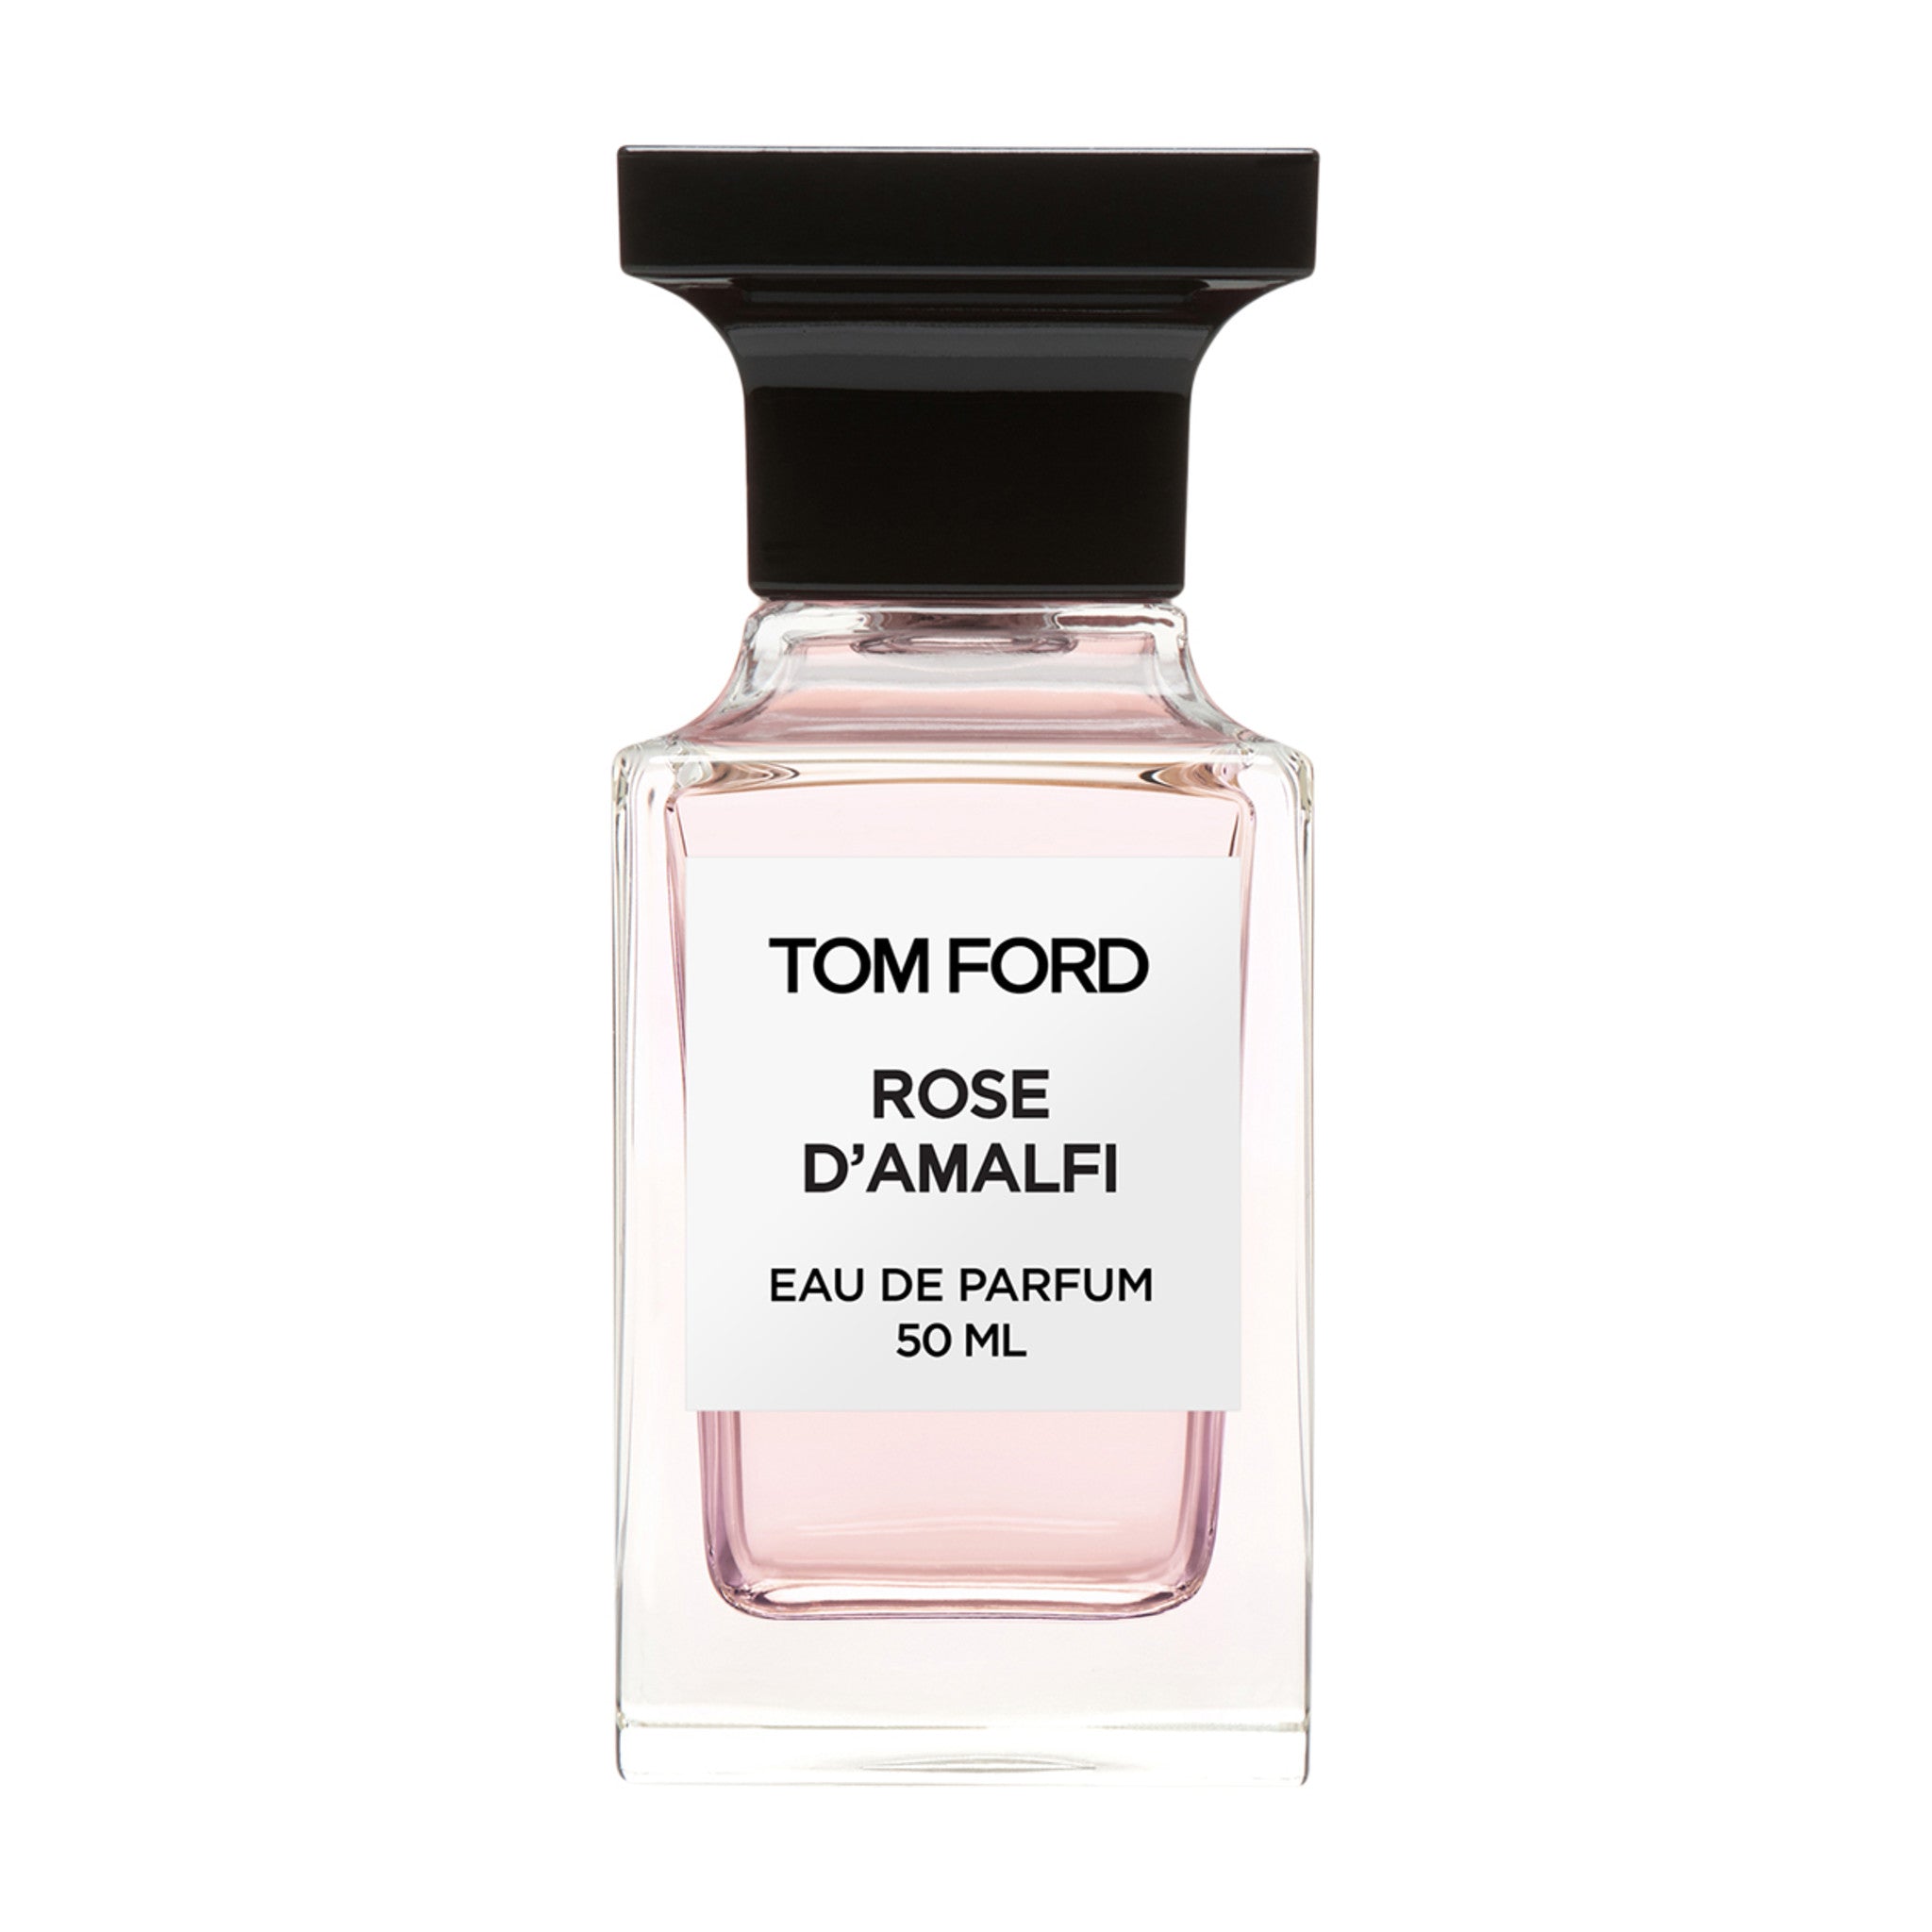 Tom Ford Rose d'amalfi Size variant: 1.7 oz | 50 ml main image.